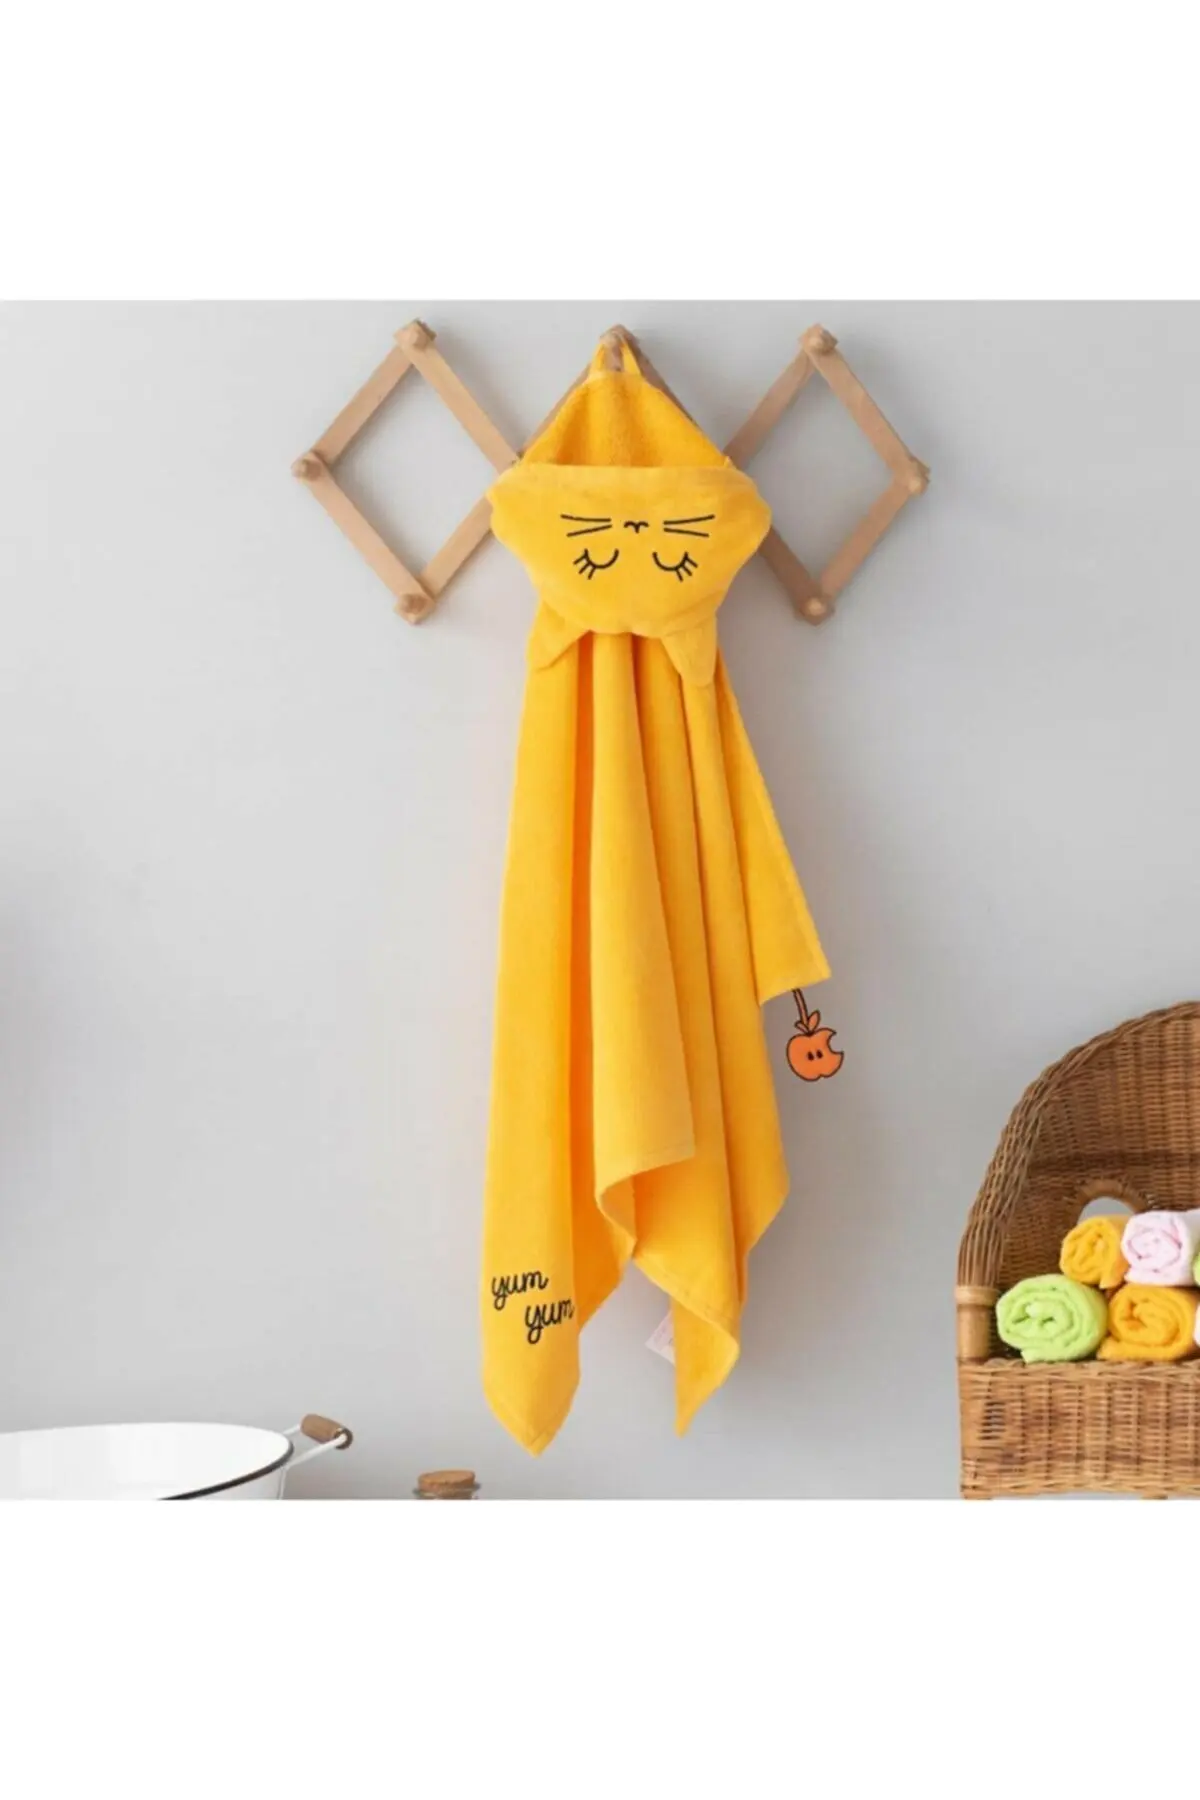 Milk & Moo yellow Velvet Yellow Chubby Cat  Swaddle Towel  meow meow baby bathrobe animal kids towel